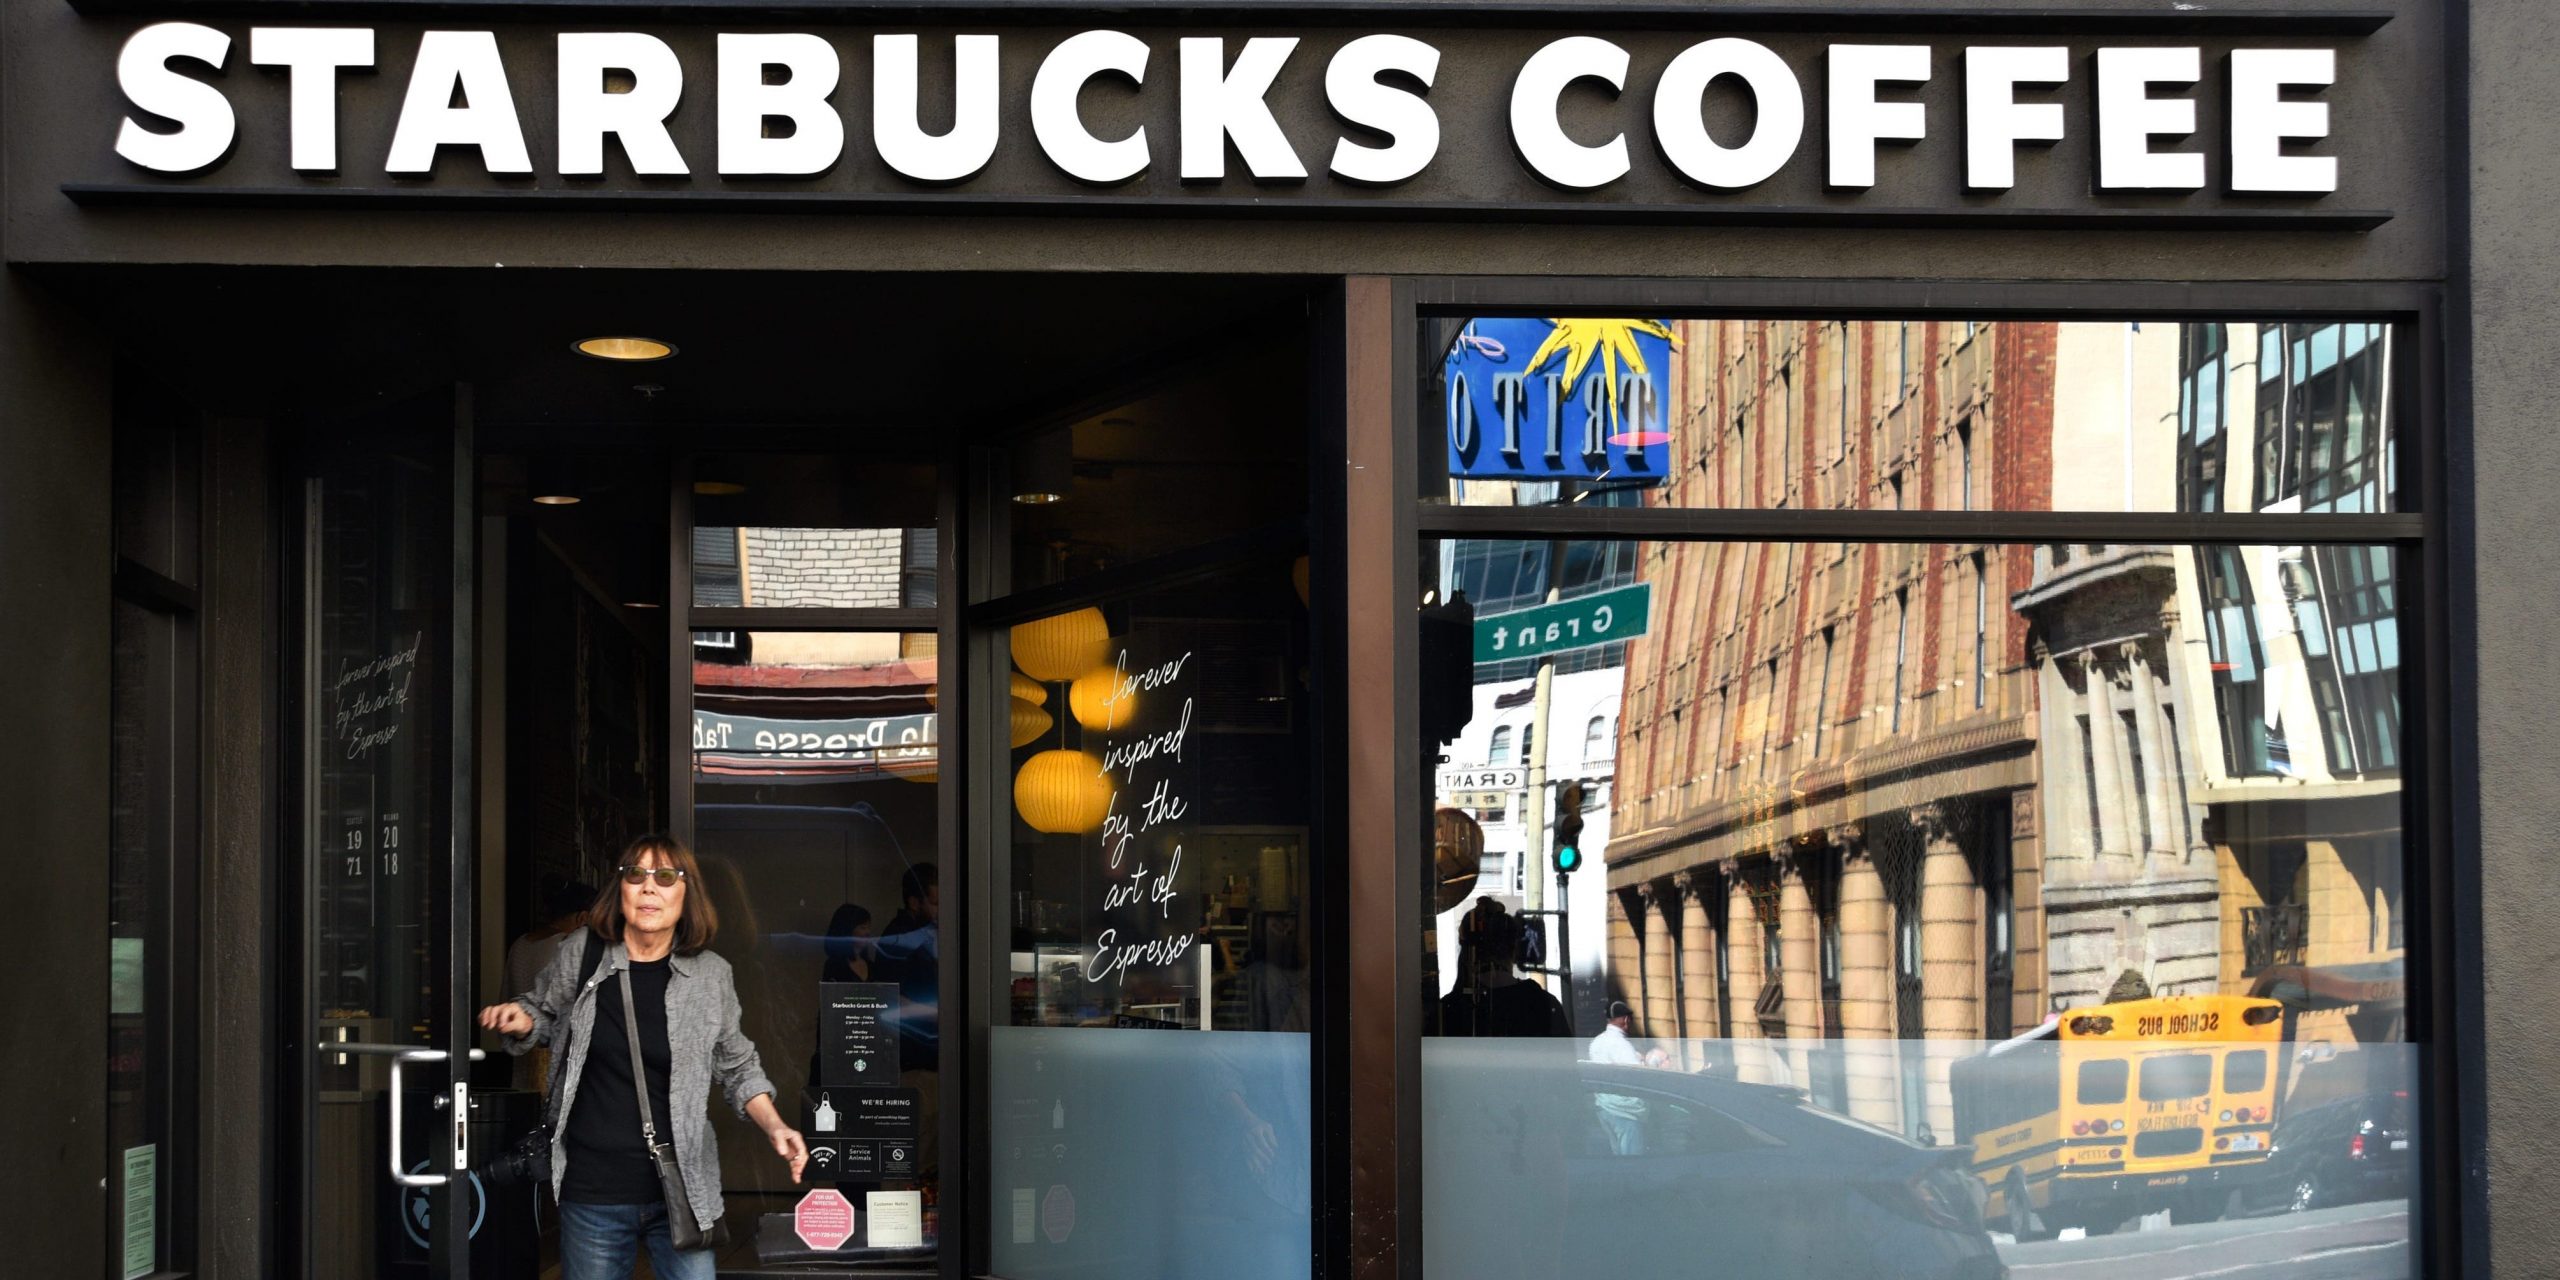 A customer leaves a Starbucks Coffee shop in San Francisco, California.